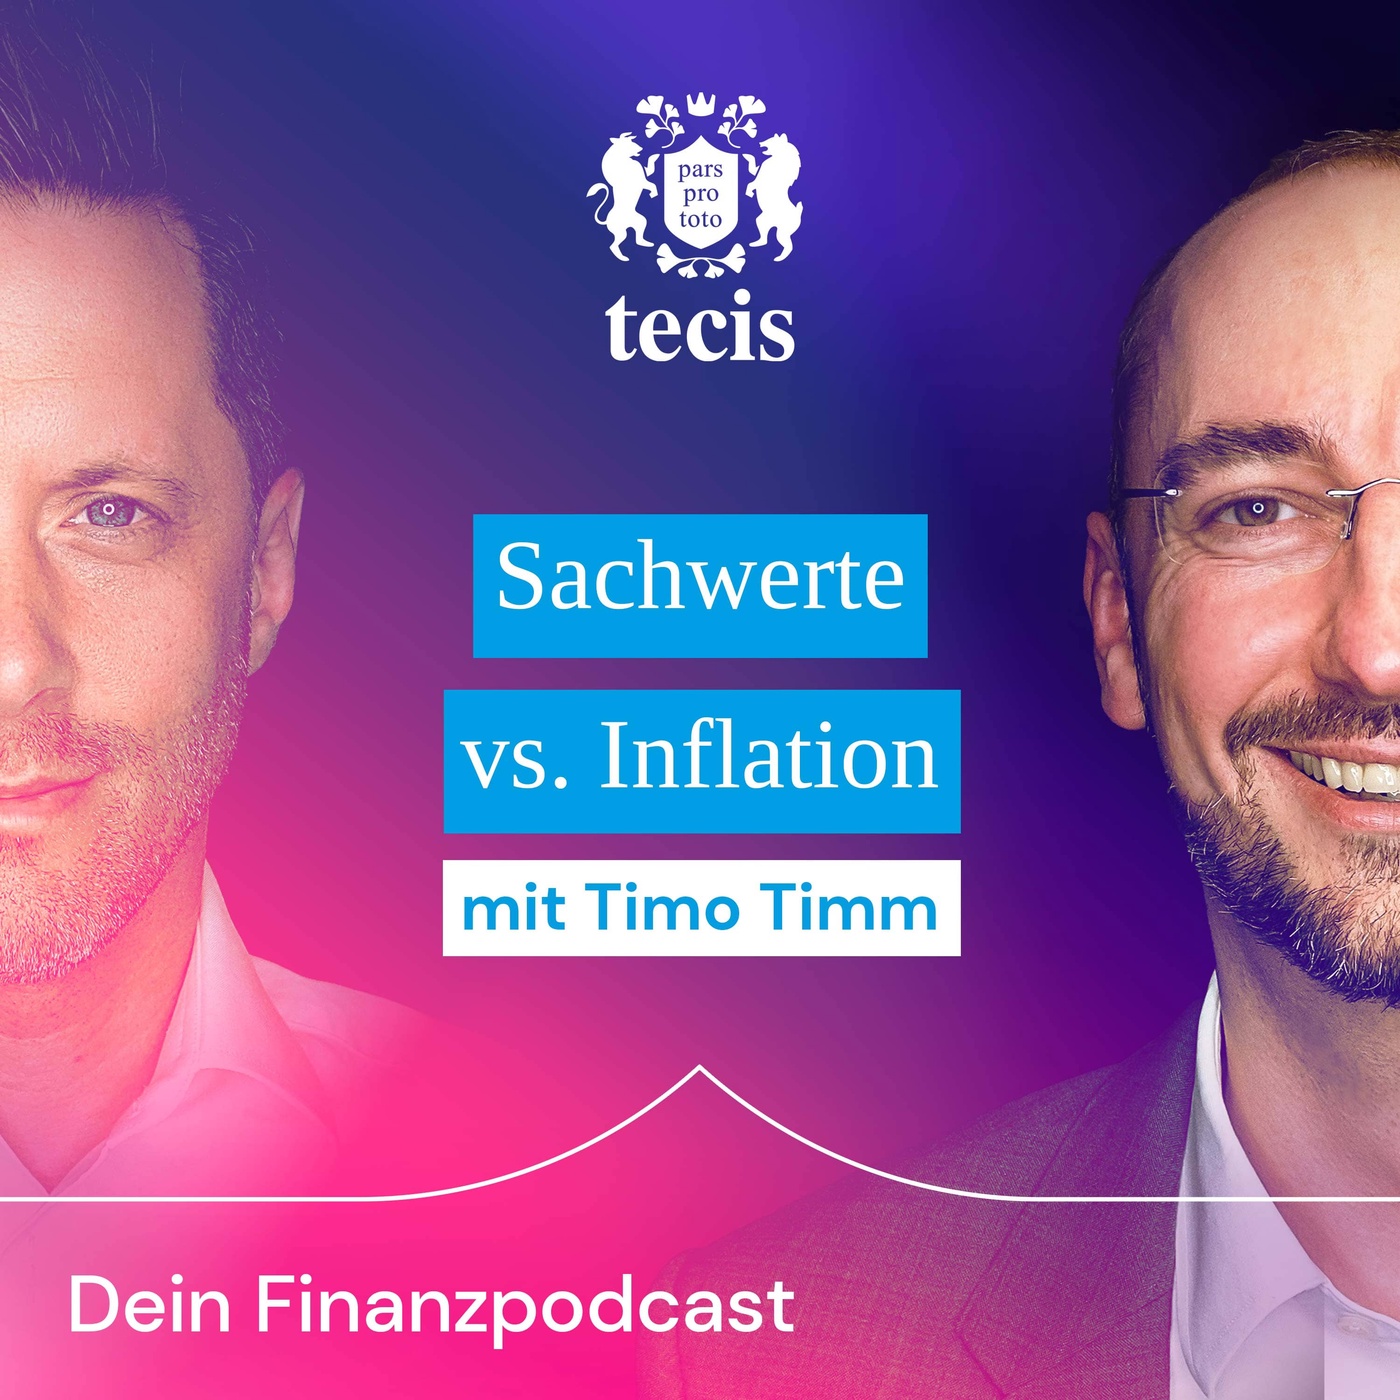 Sachwerte vs. Inflation. Mit Timo Timm